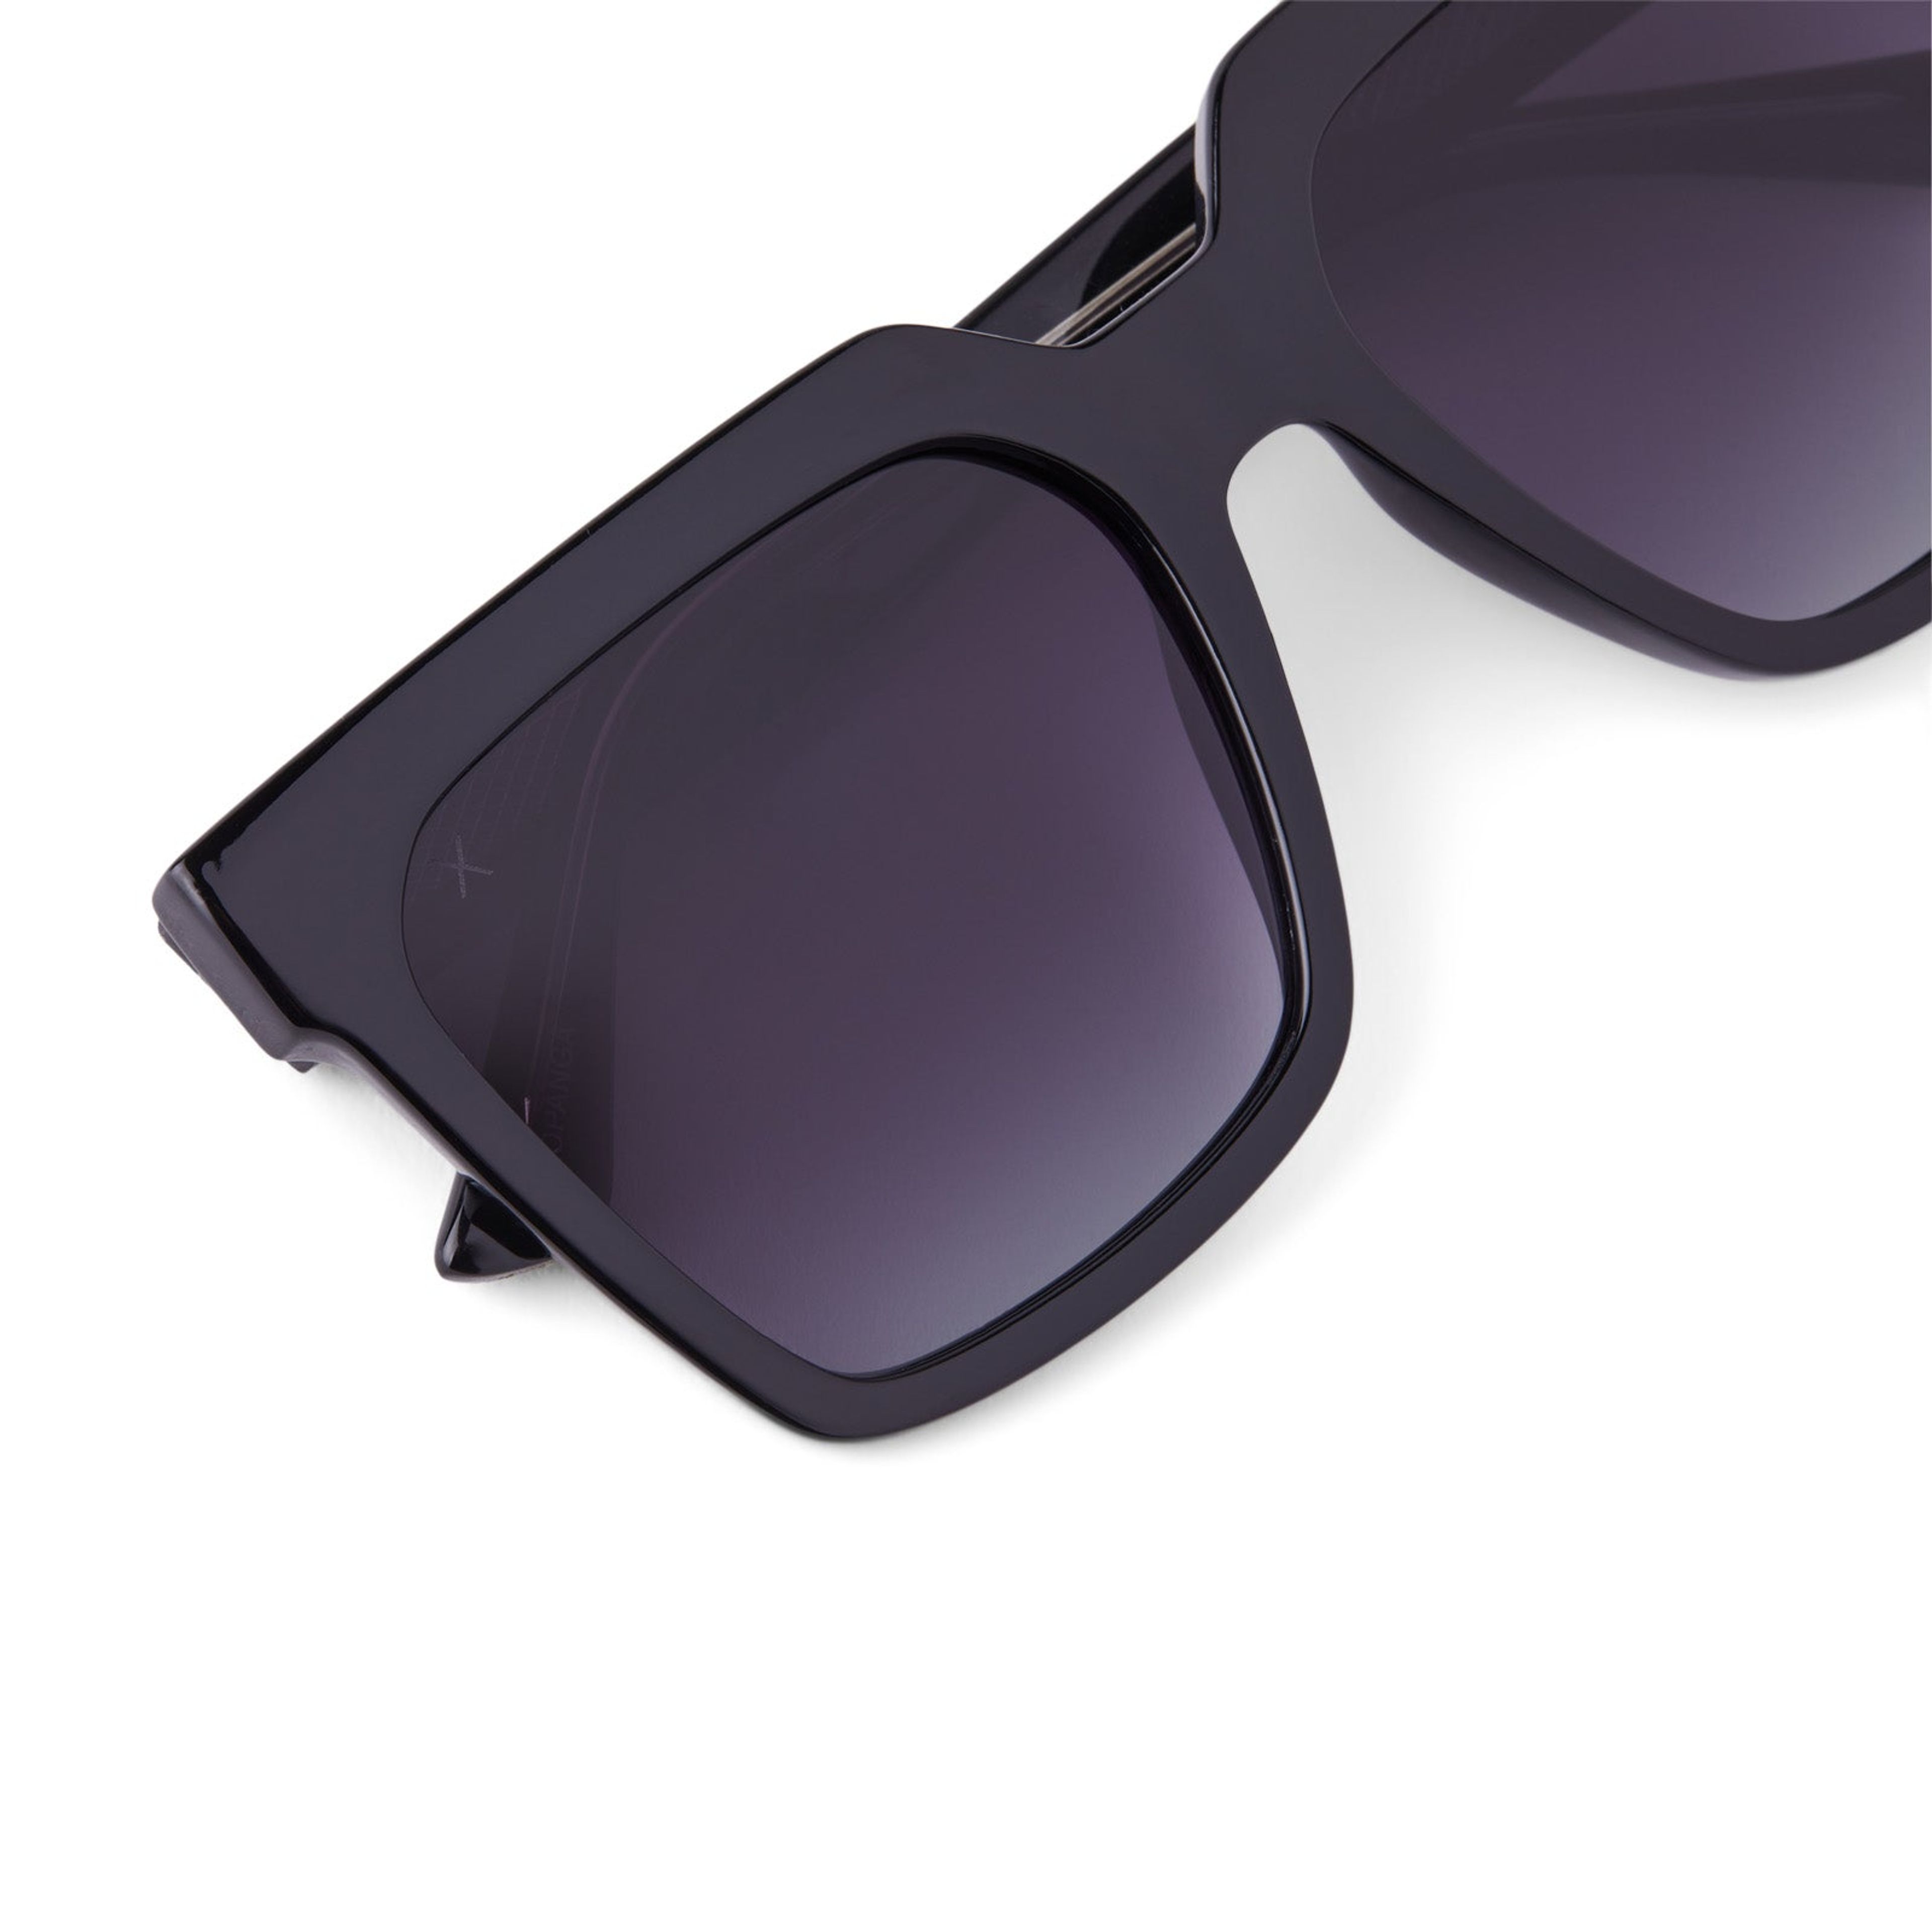 topanga - black + grey gradient sunglasses